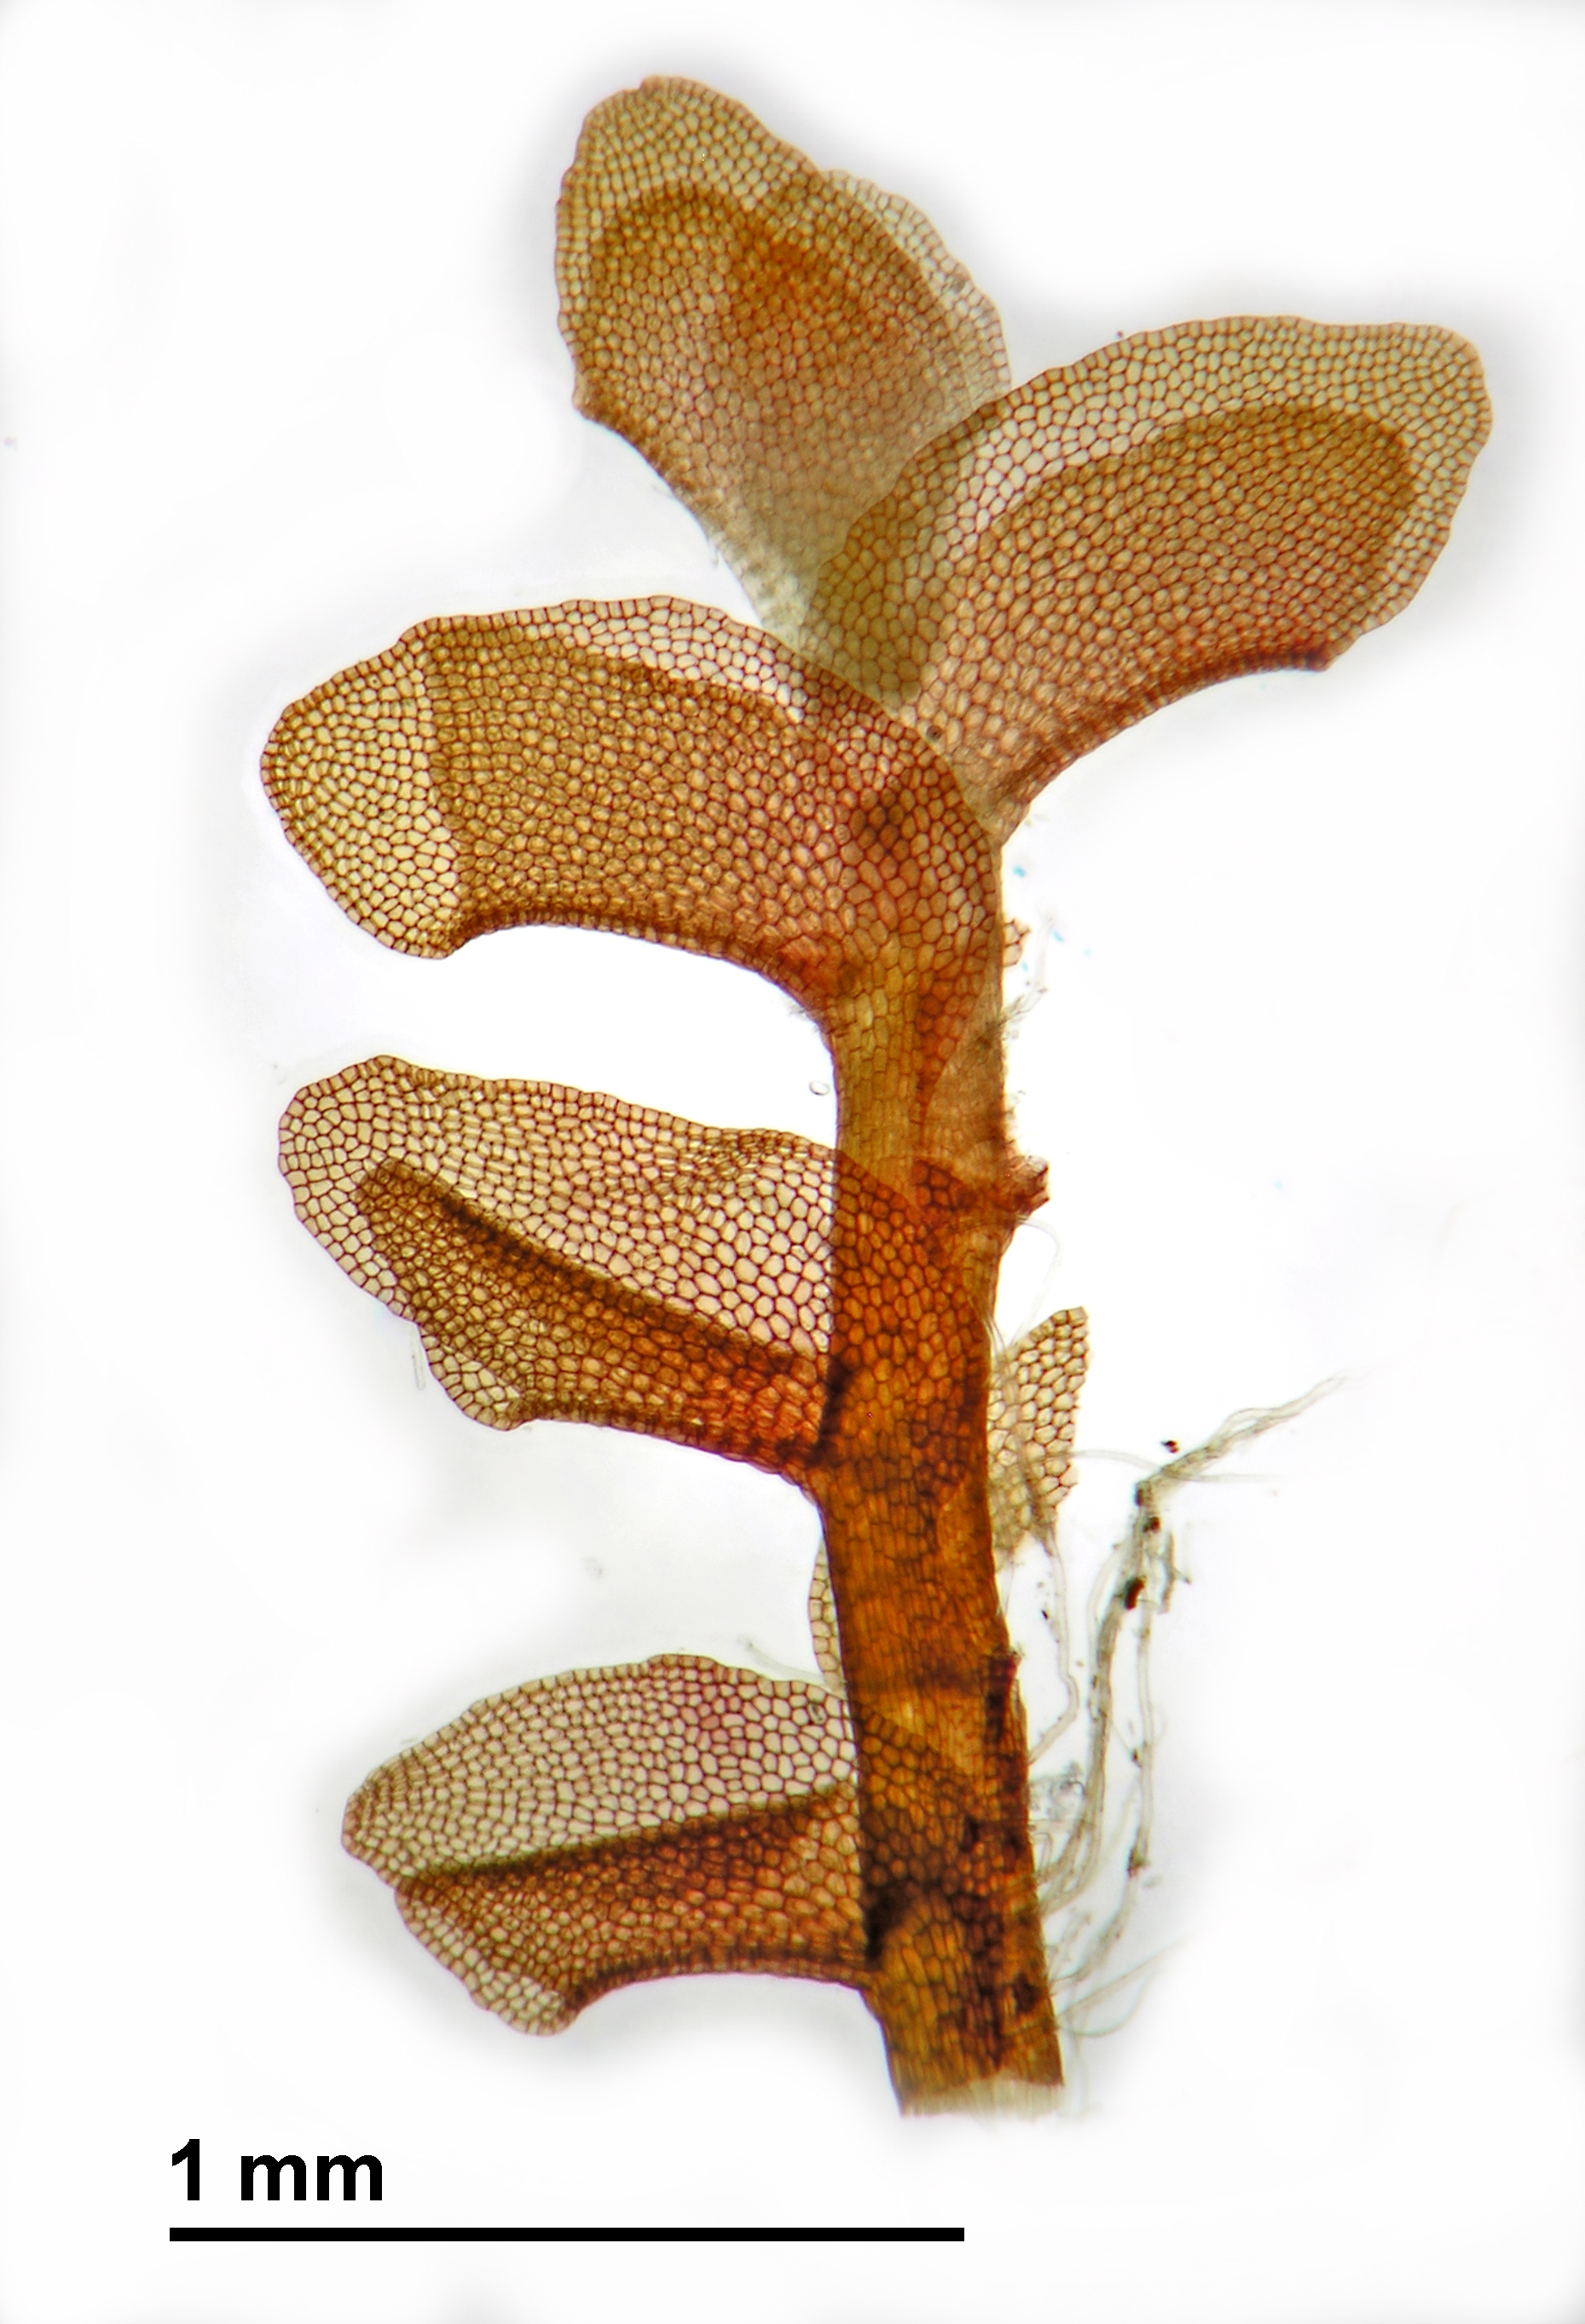 Scapania obscura - ventral aspect, stripped